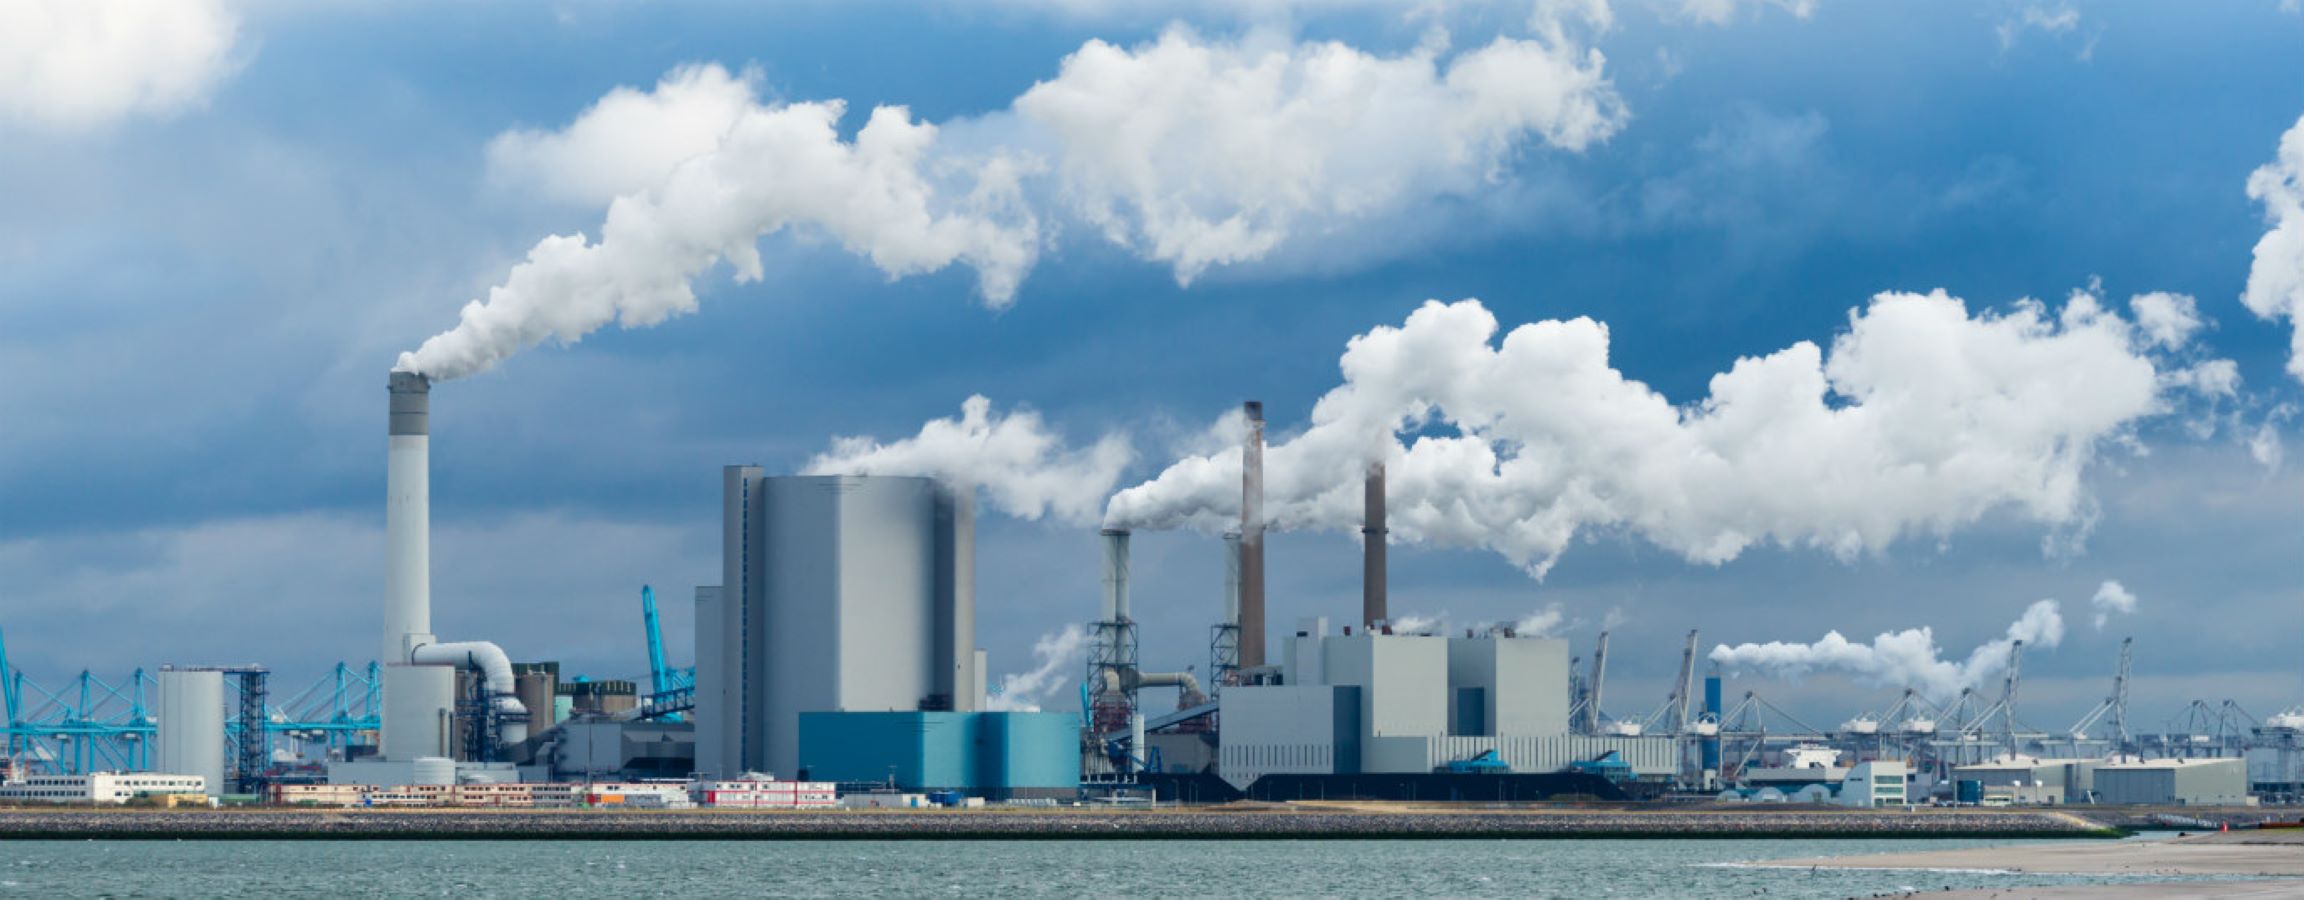 empresas-emisiones-cdp-analisis-costo-economico-clima